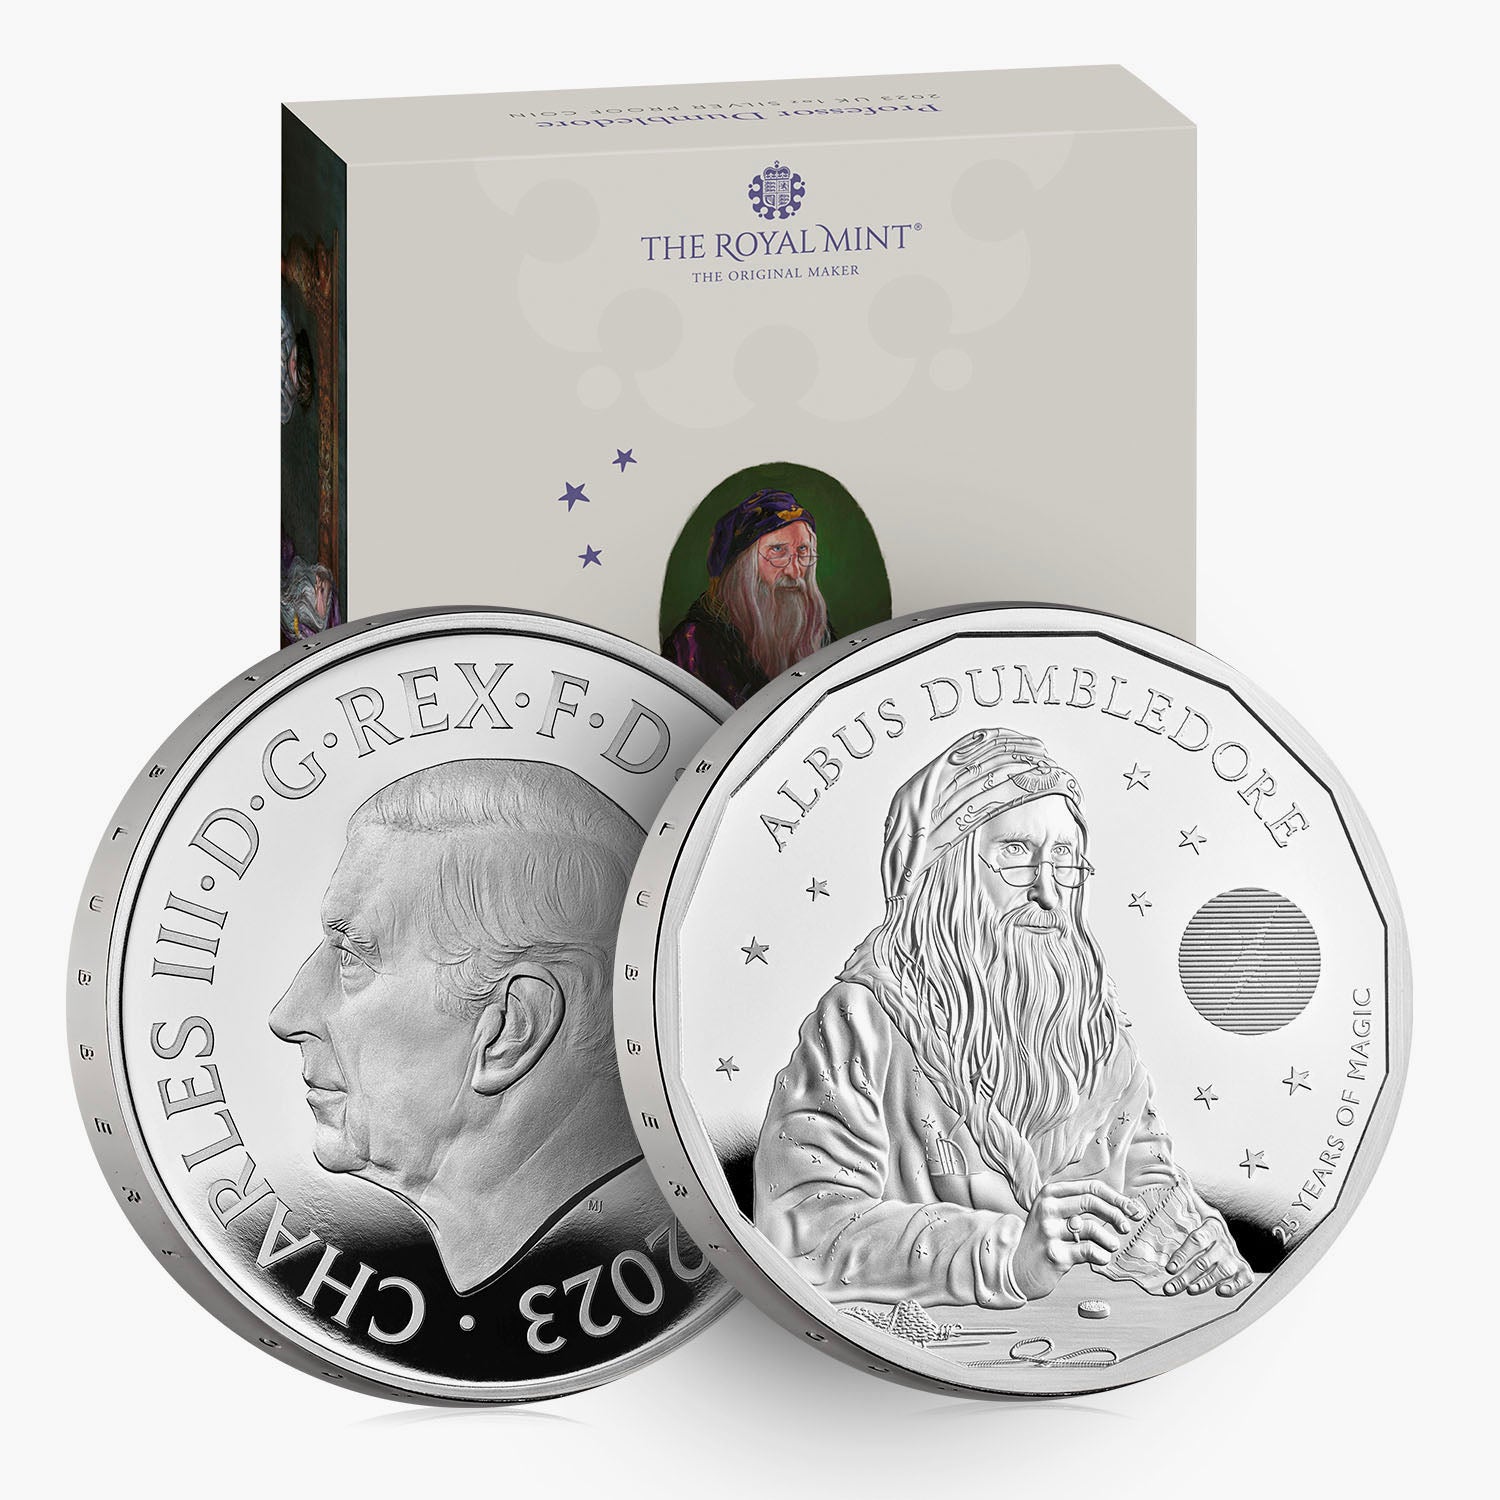 Harry Potter - Professor Dumbledore 2023 UK 1oz Silver Proof Coin